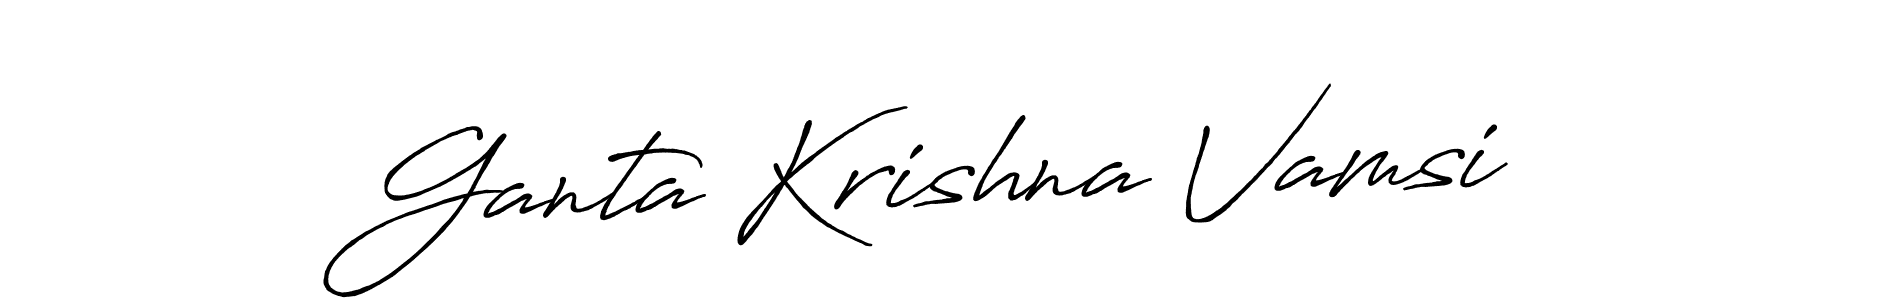 How to Draw Ganta Krishna Vamsi signature style? Antro_Vectra_Bolder is a latest design signature styles for name Ganta Krishna Vamsi. Ganta Krishna Vamsi signature style 7 images and pictures png